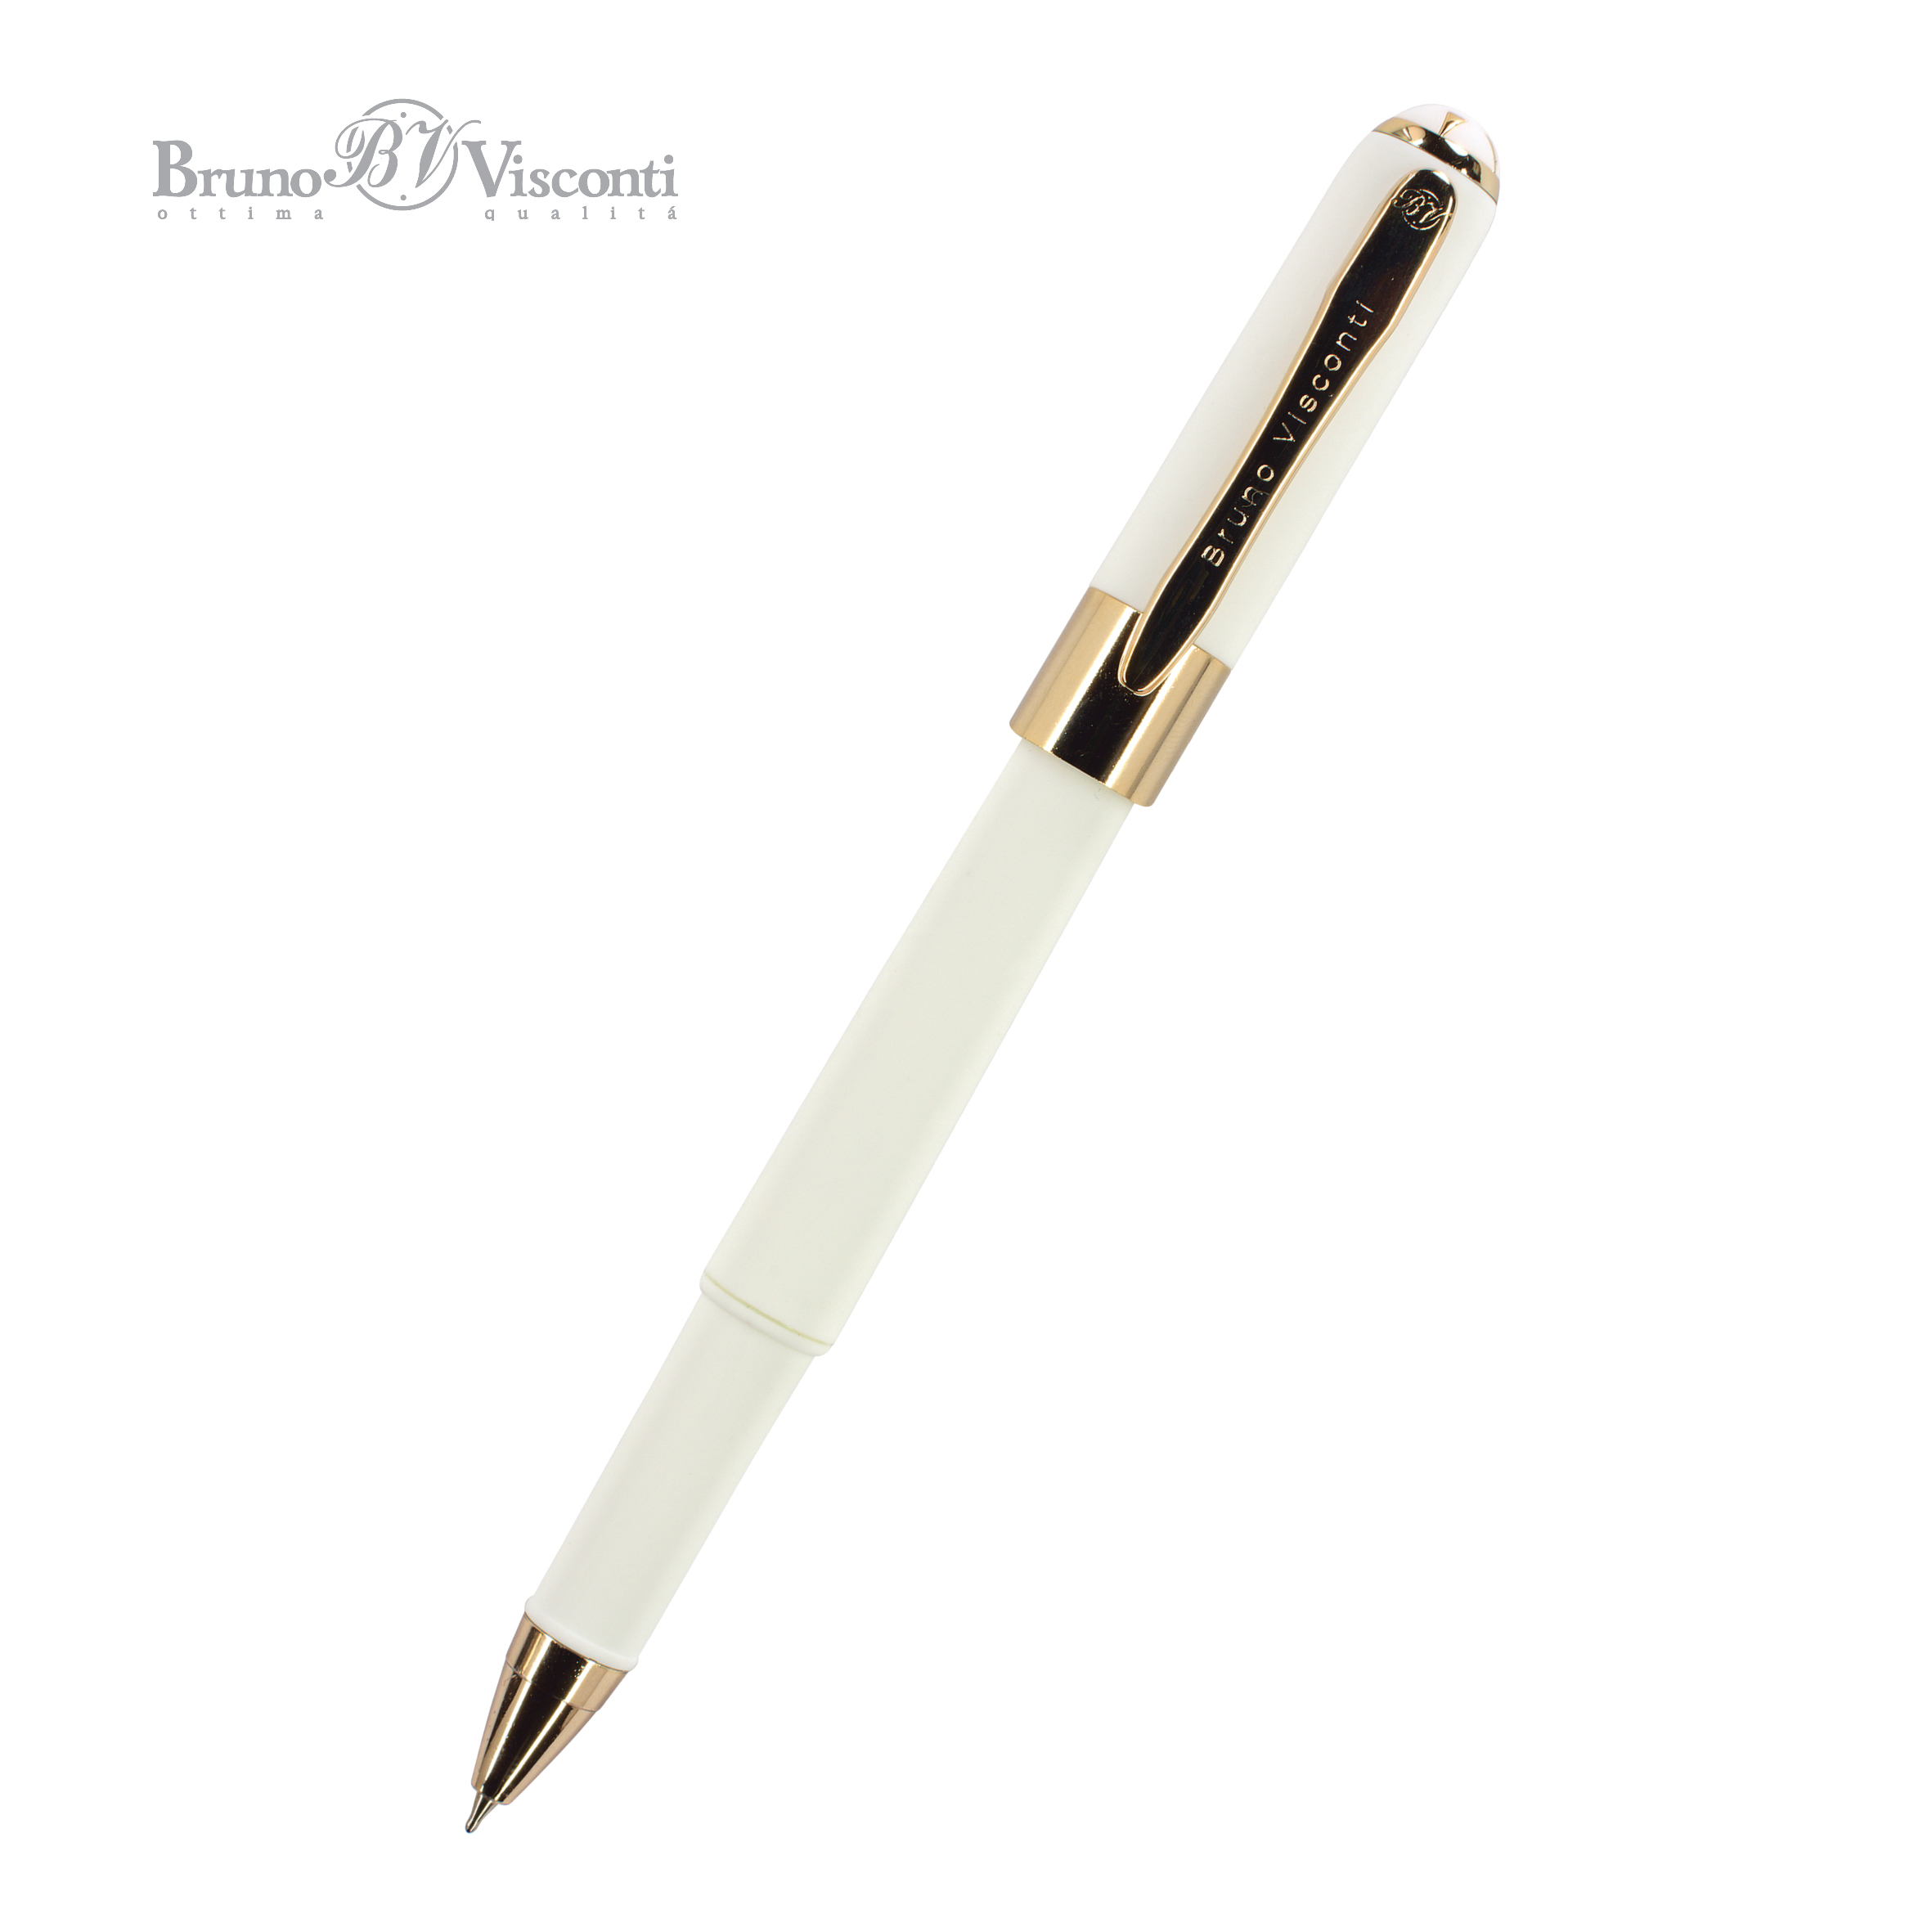 Ручка подар шар BV Monaco синяя 0,5мм белый корпус